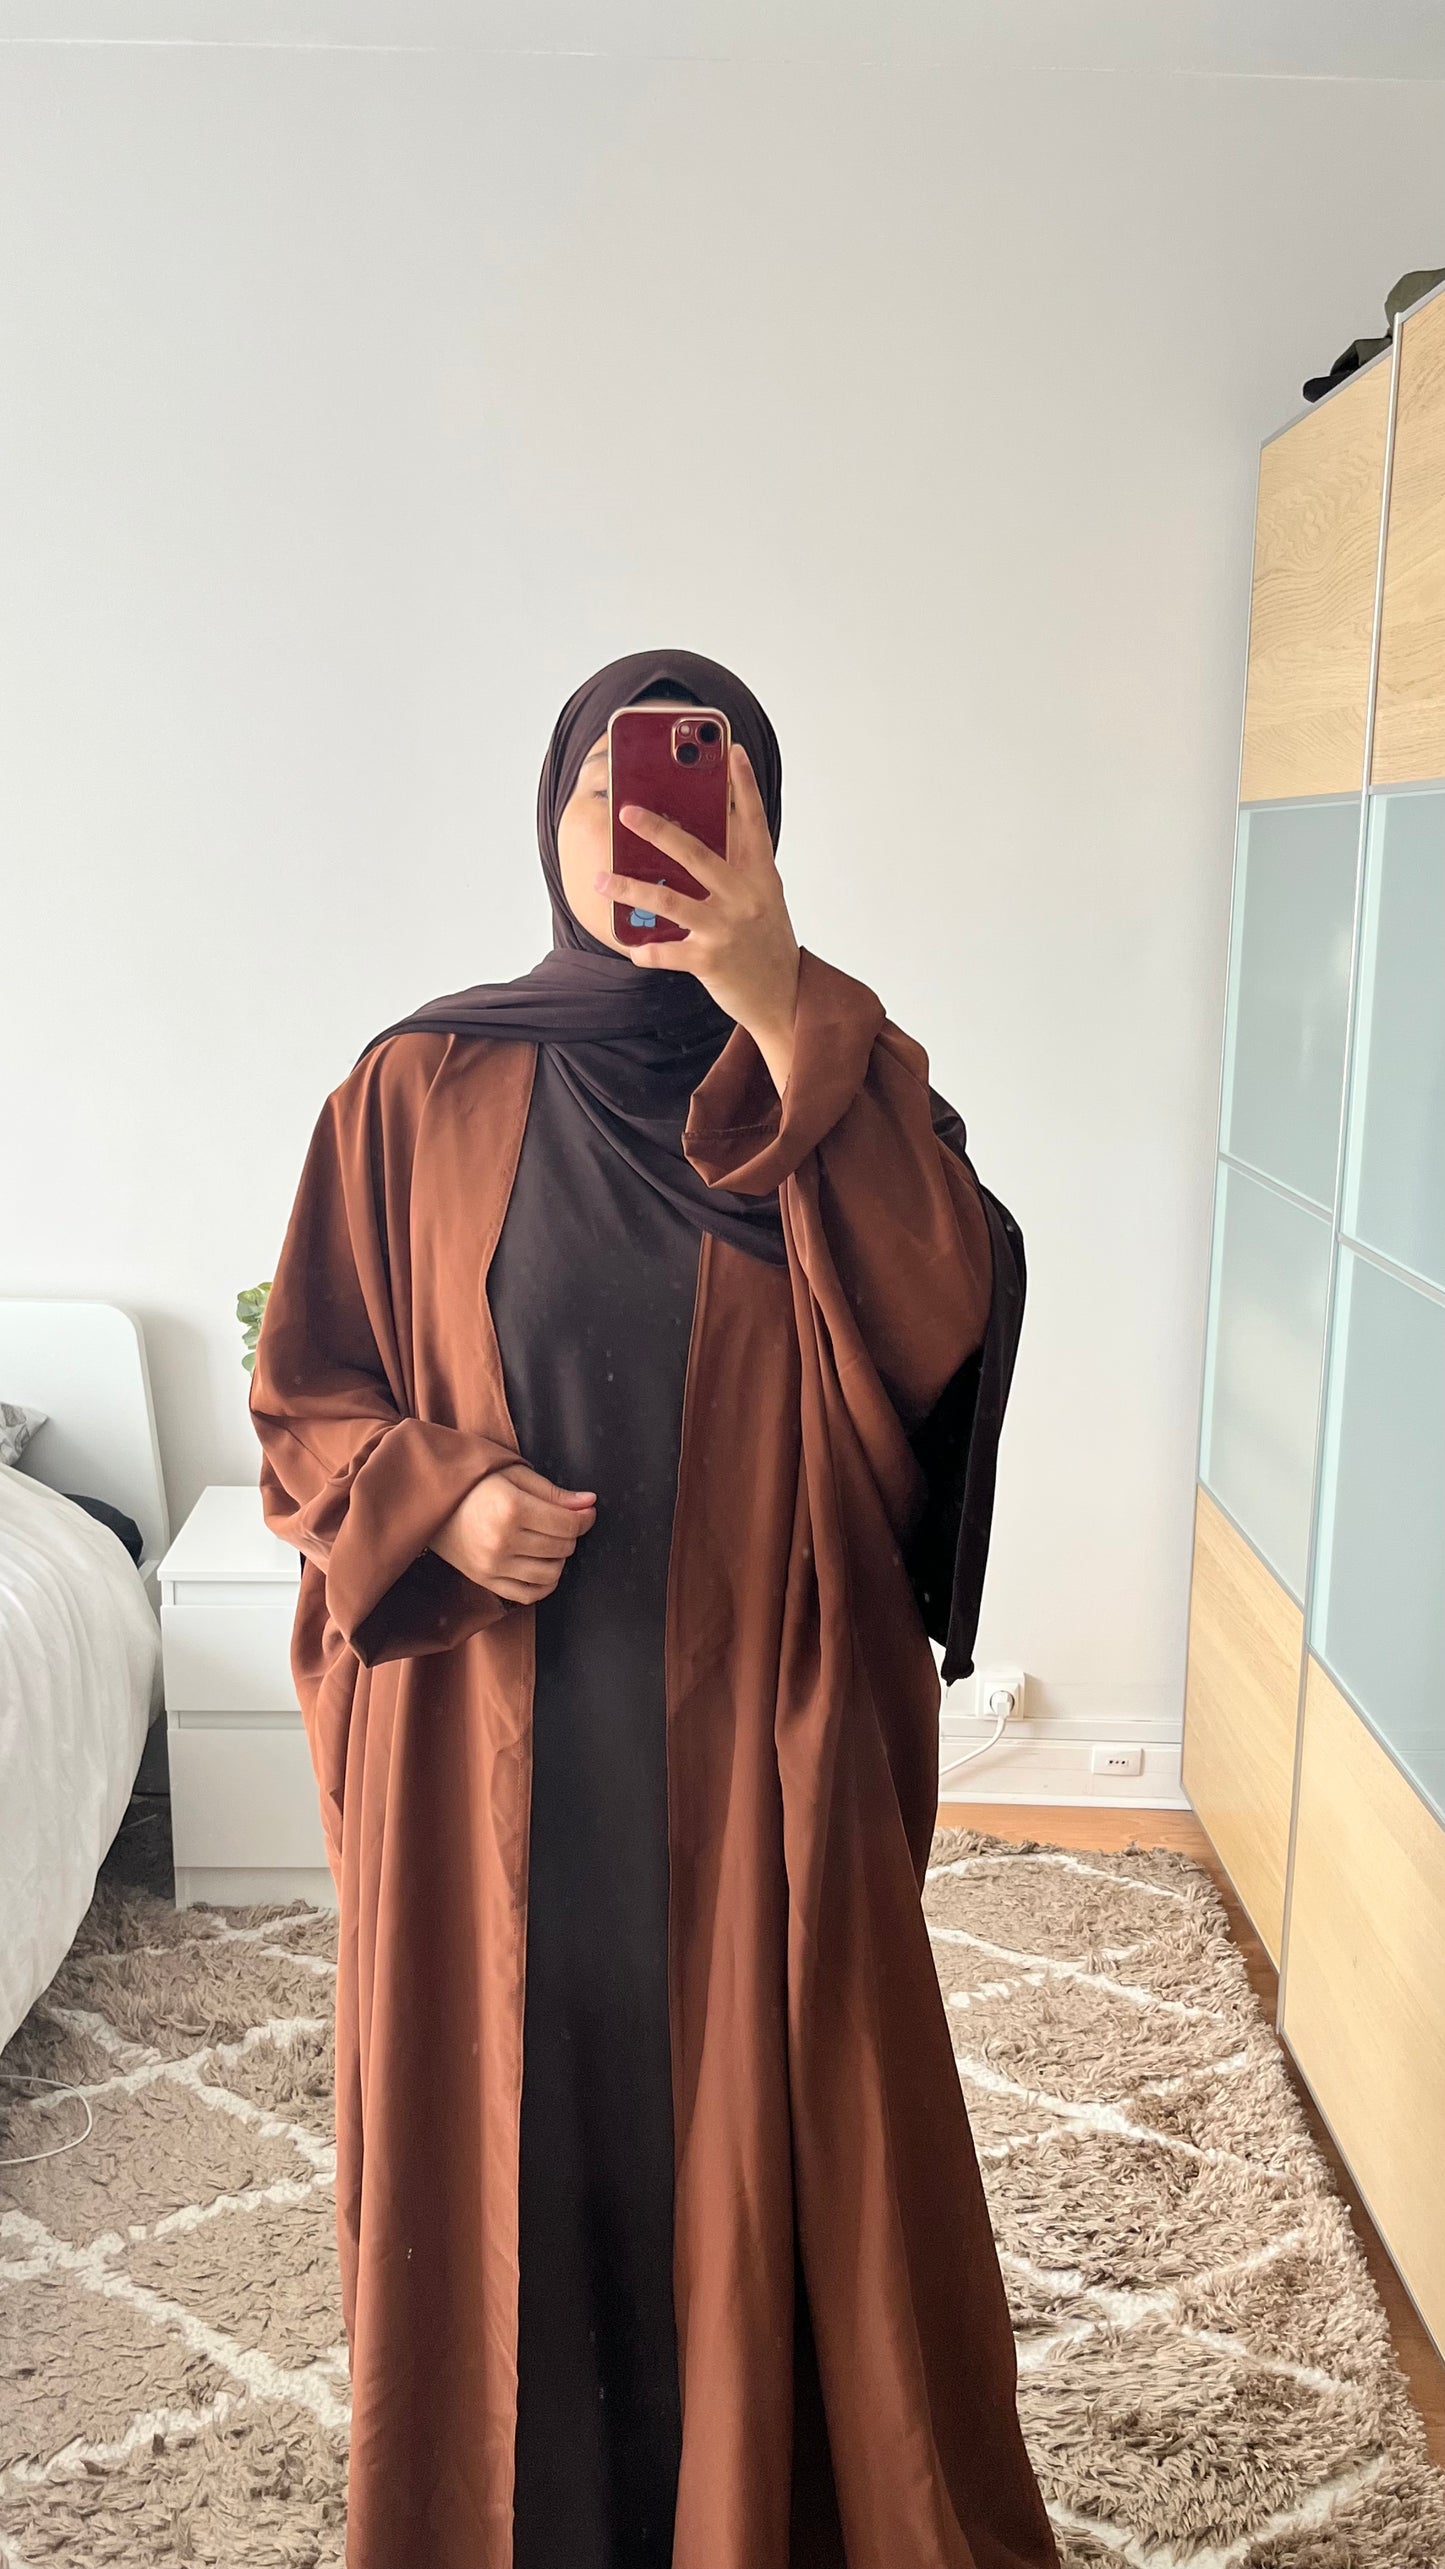 Under abaya